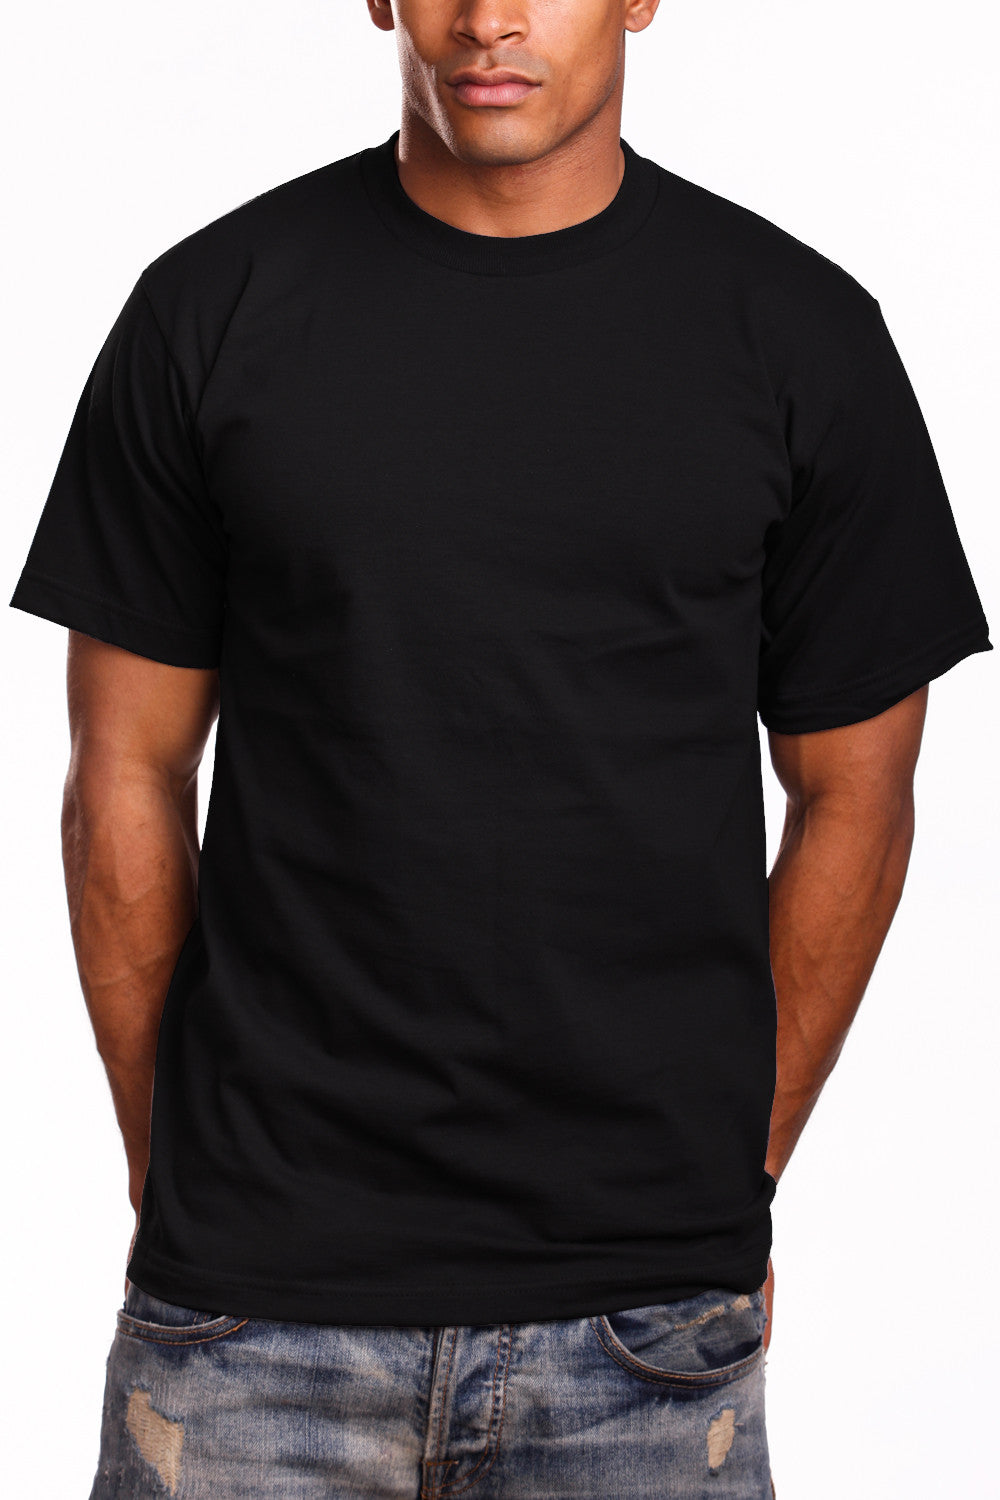 Basic Heavyweight Tall Big Size Plain T-Shirt Navy / 4XL / Tall Size